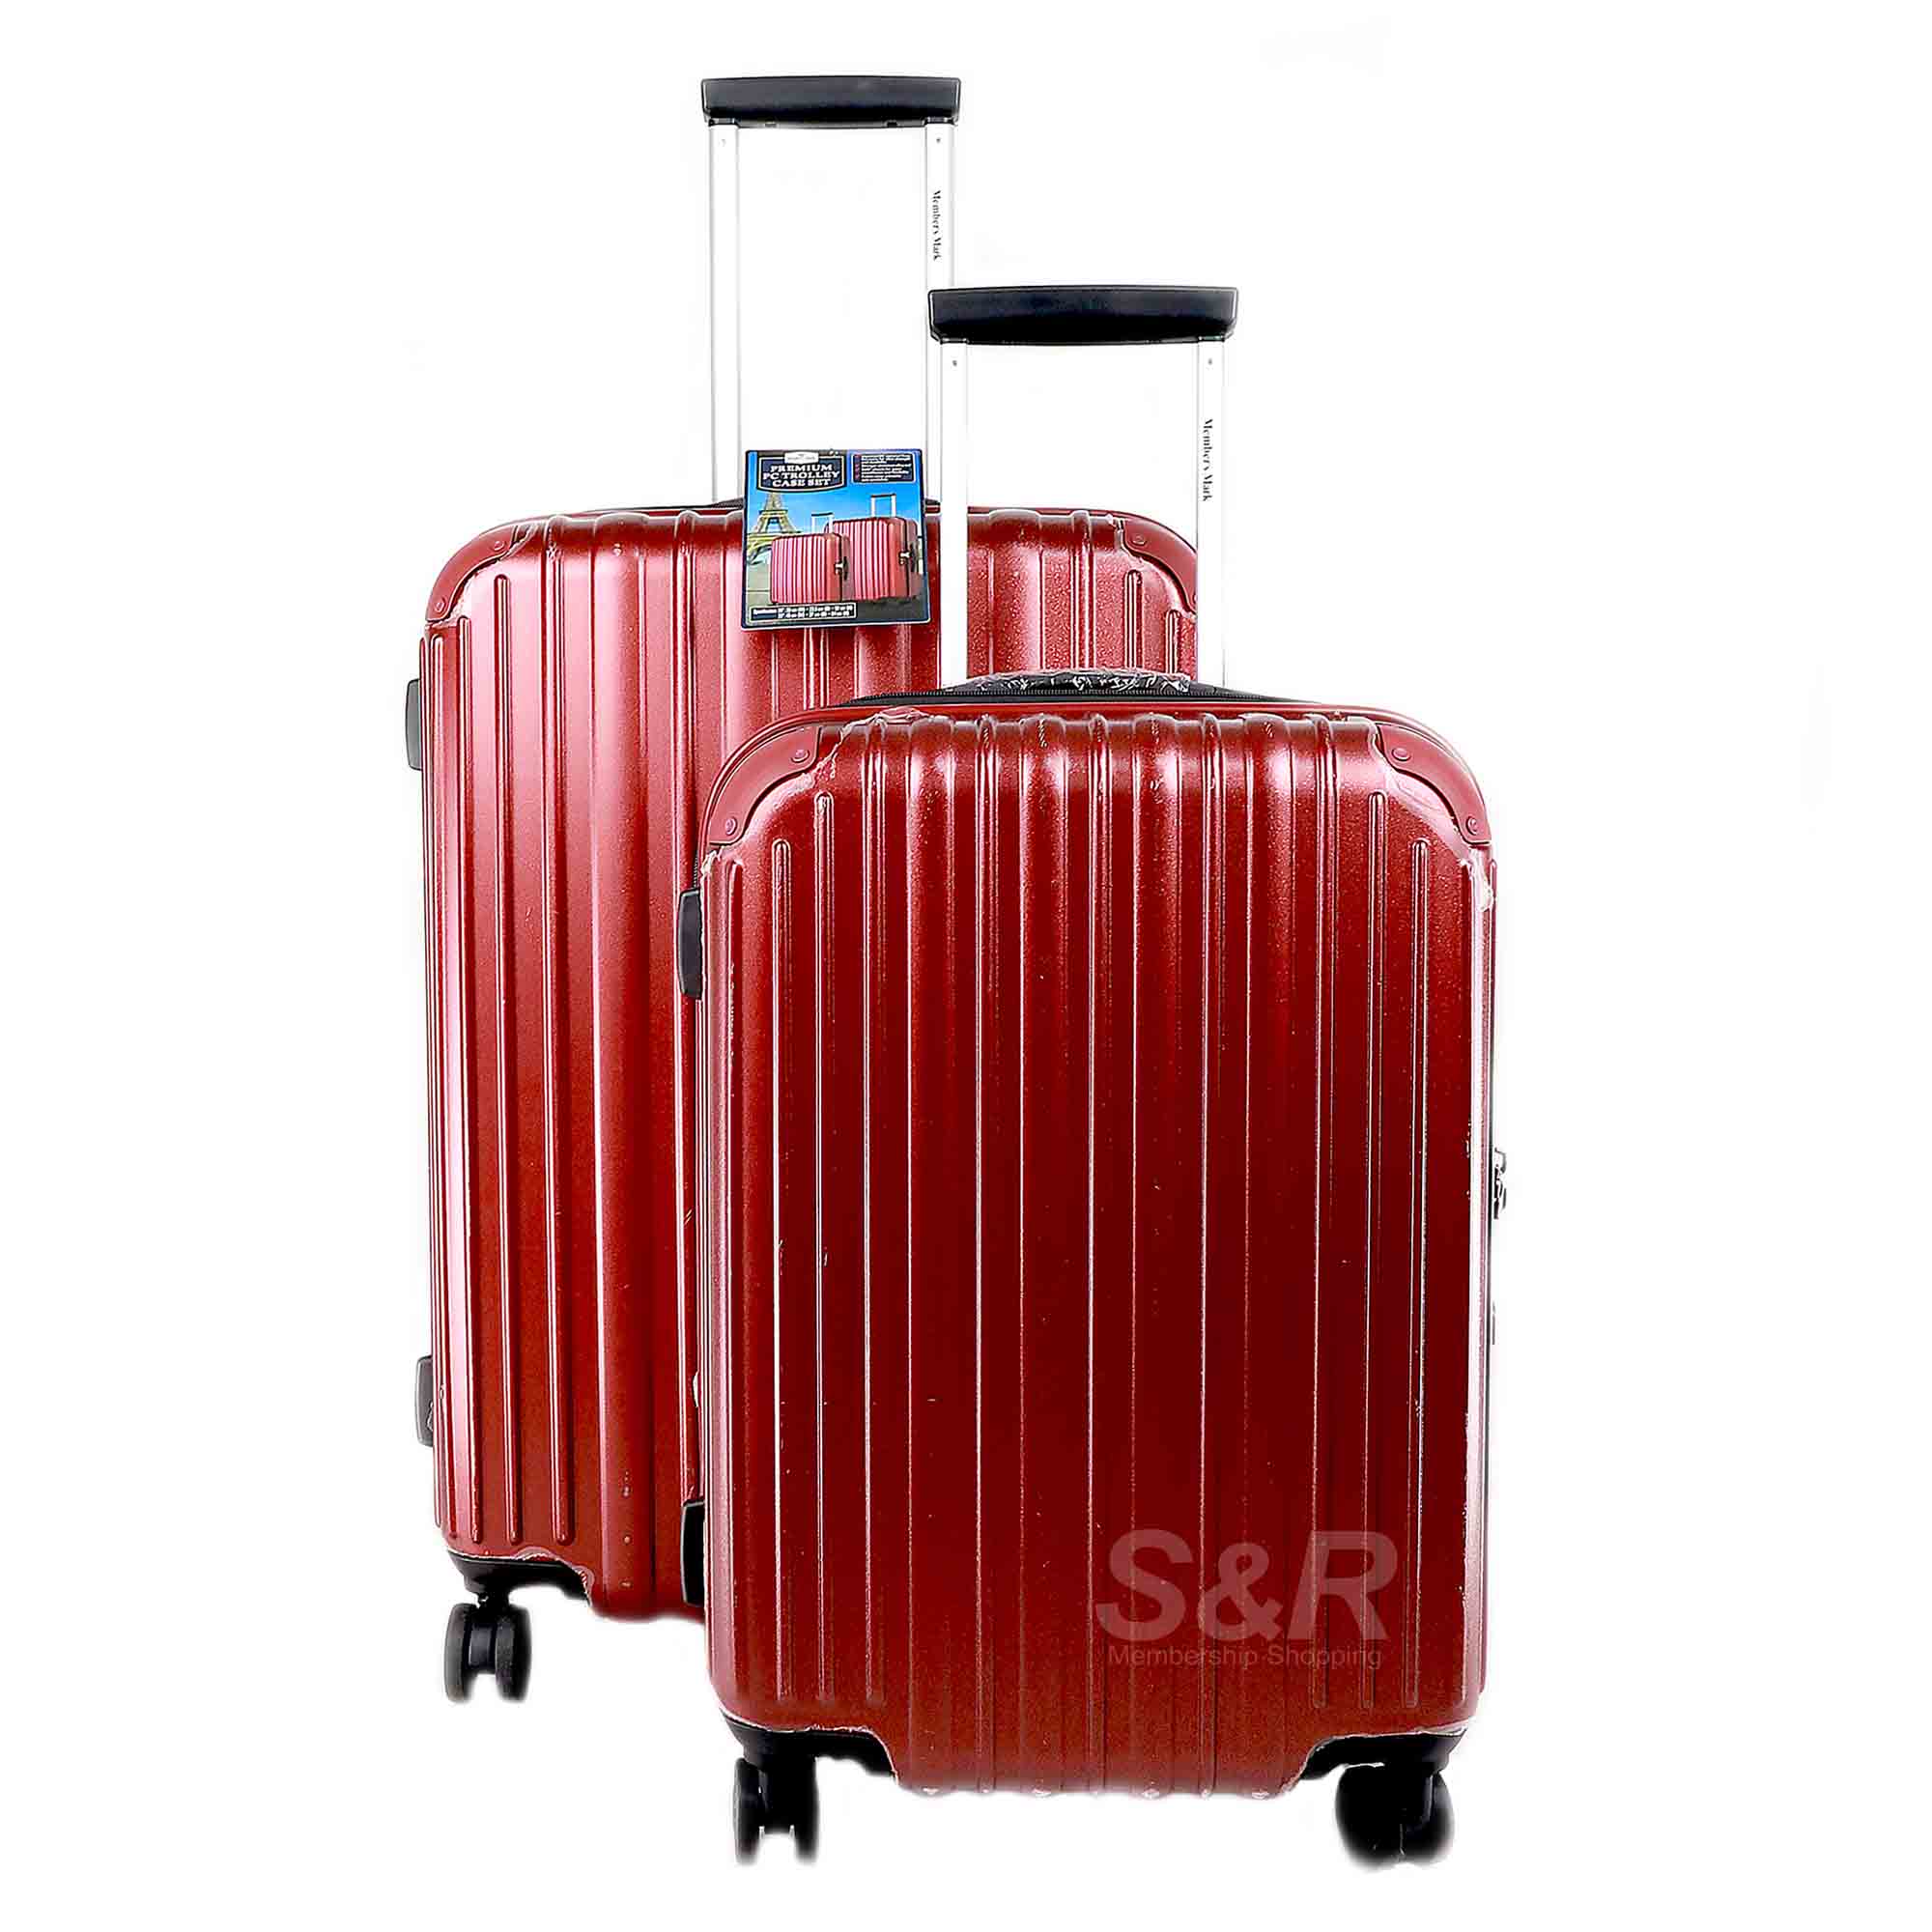 Member's Mark Premium Hard Case Spinner Red Luggage 2pcs